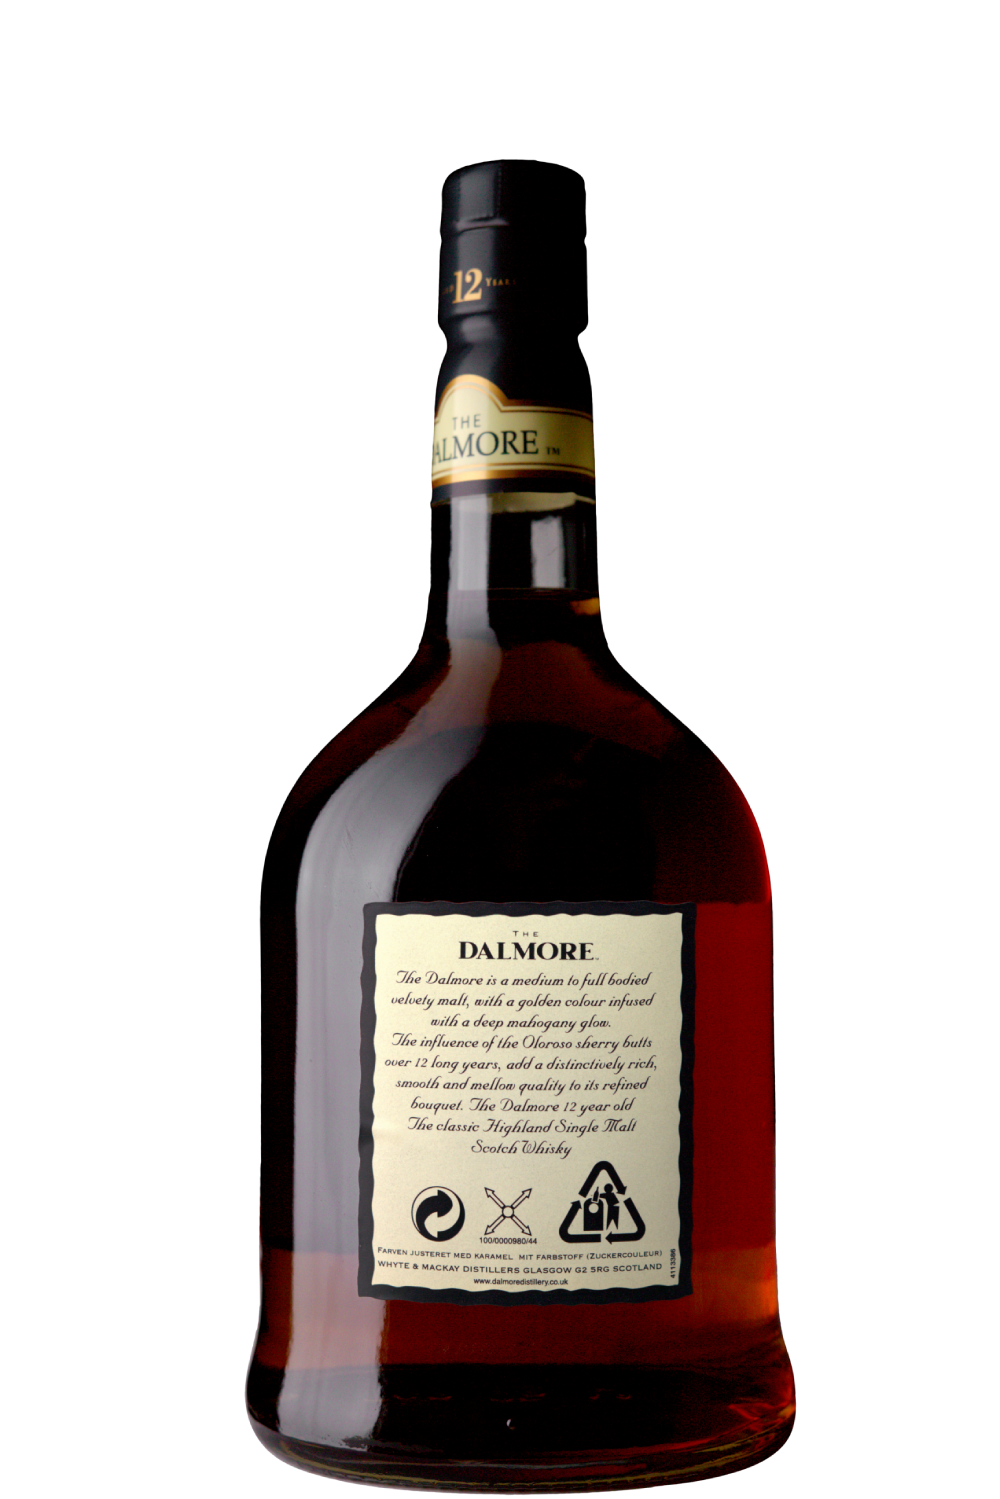 WineVins The Dalmore Single Highland Malt 12 Years Scotch Whisky